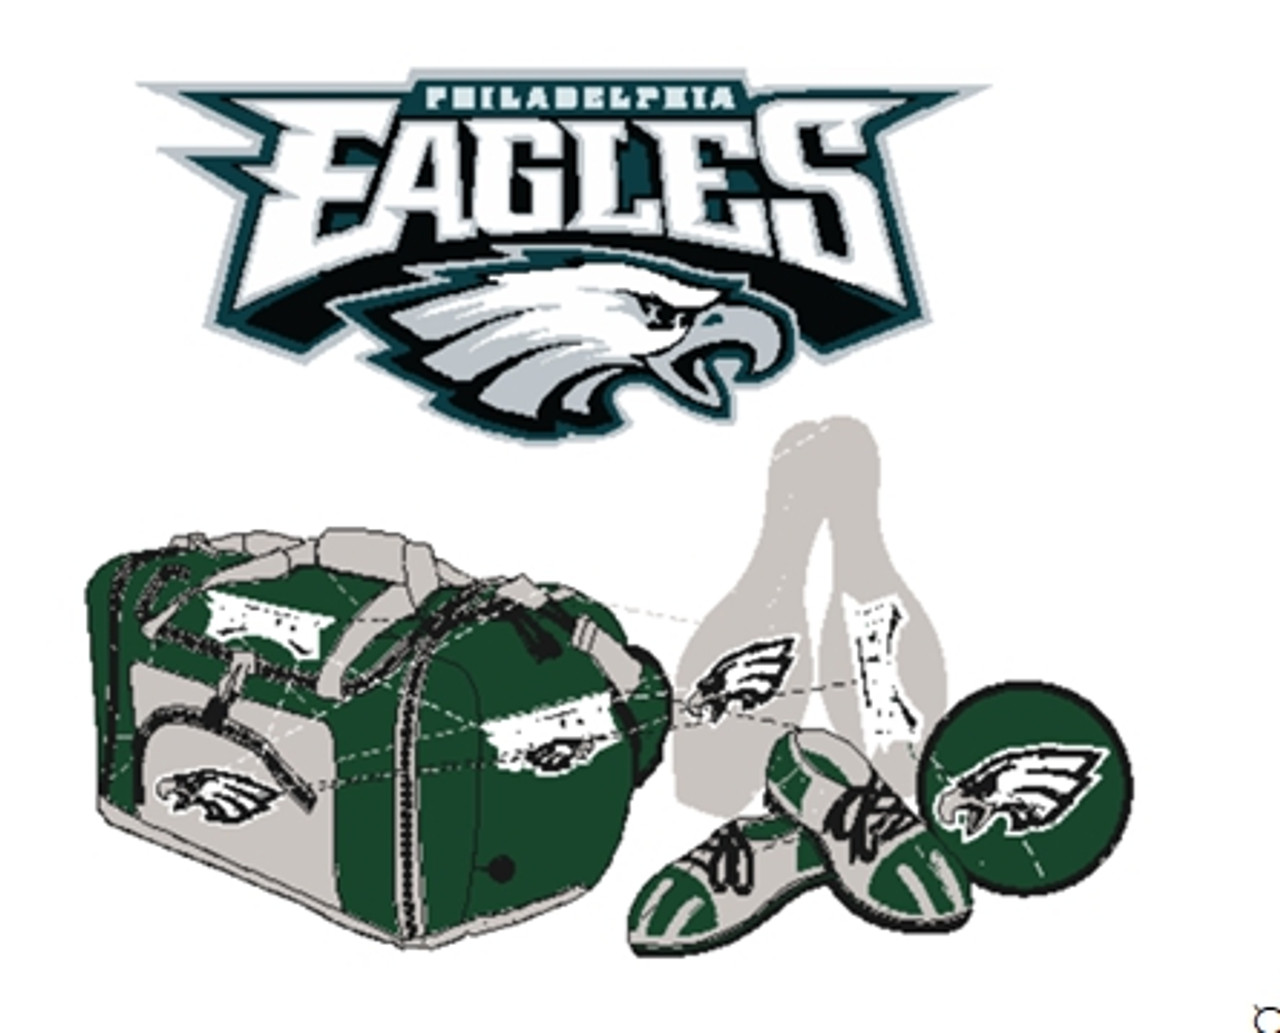 philadelphia eagles football gear